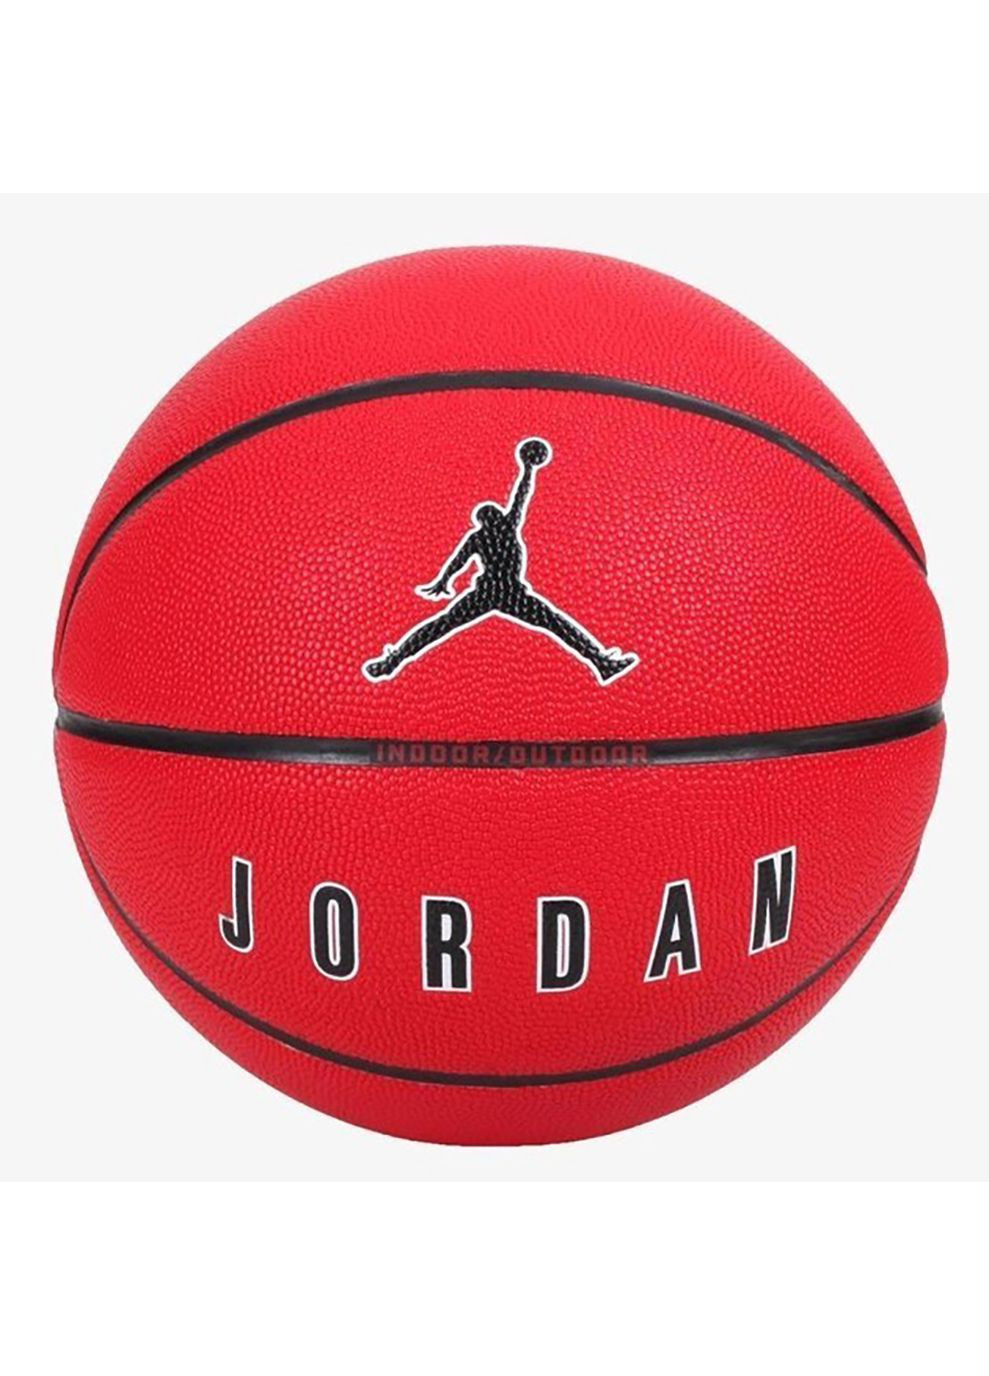 М'яч баскетбольний NIKE ULTIMATE 2.0 8P DEFLATED UNIVERSITY RED/BLACK/WHITE/BLACK size 7 Jordan (268833798)